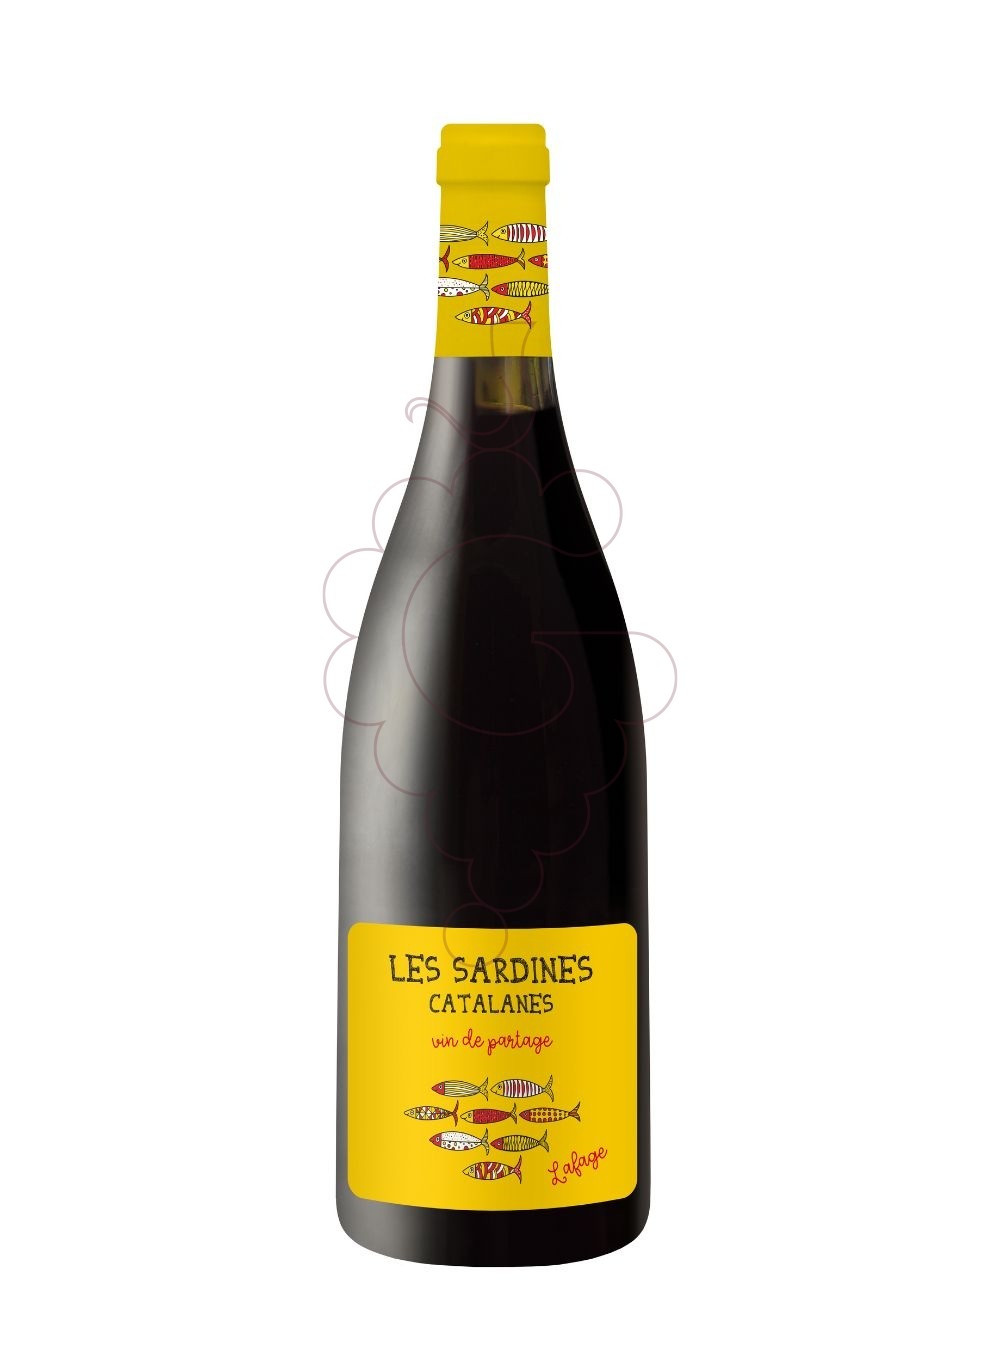 Foto Les sardines catalanes negre vino tinto